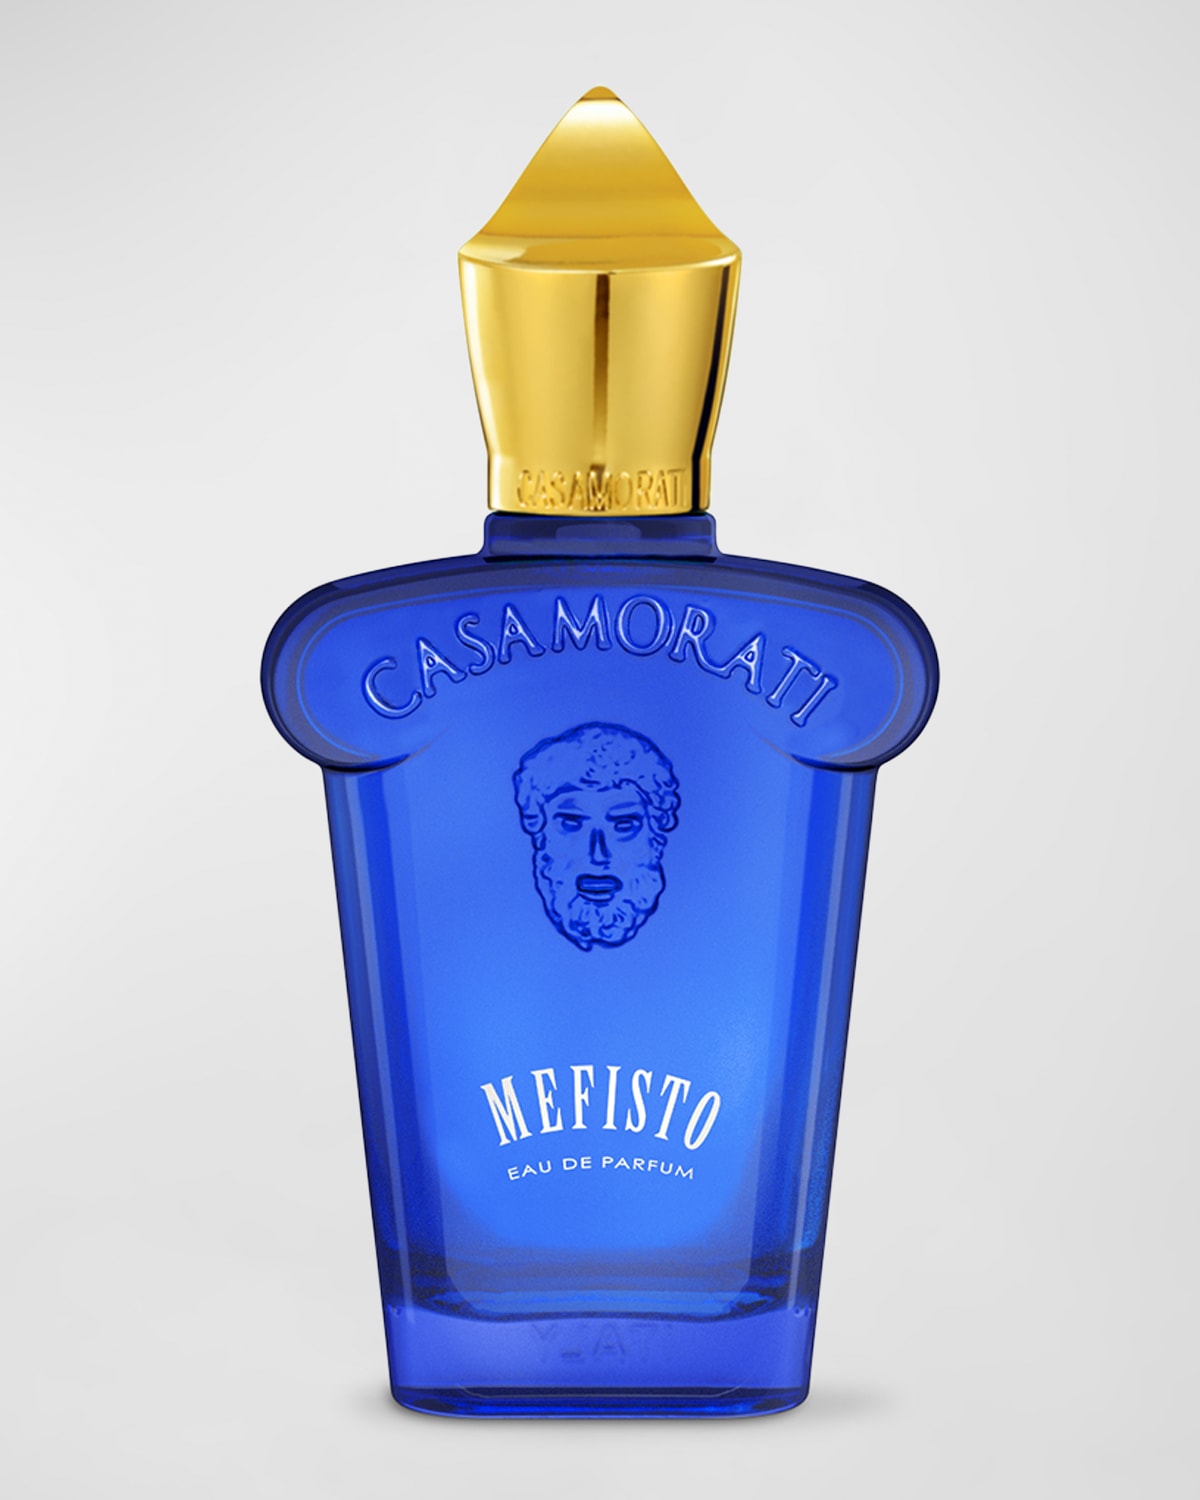 Mefisto Eau de Parfum, 1 oz.